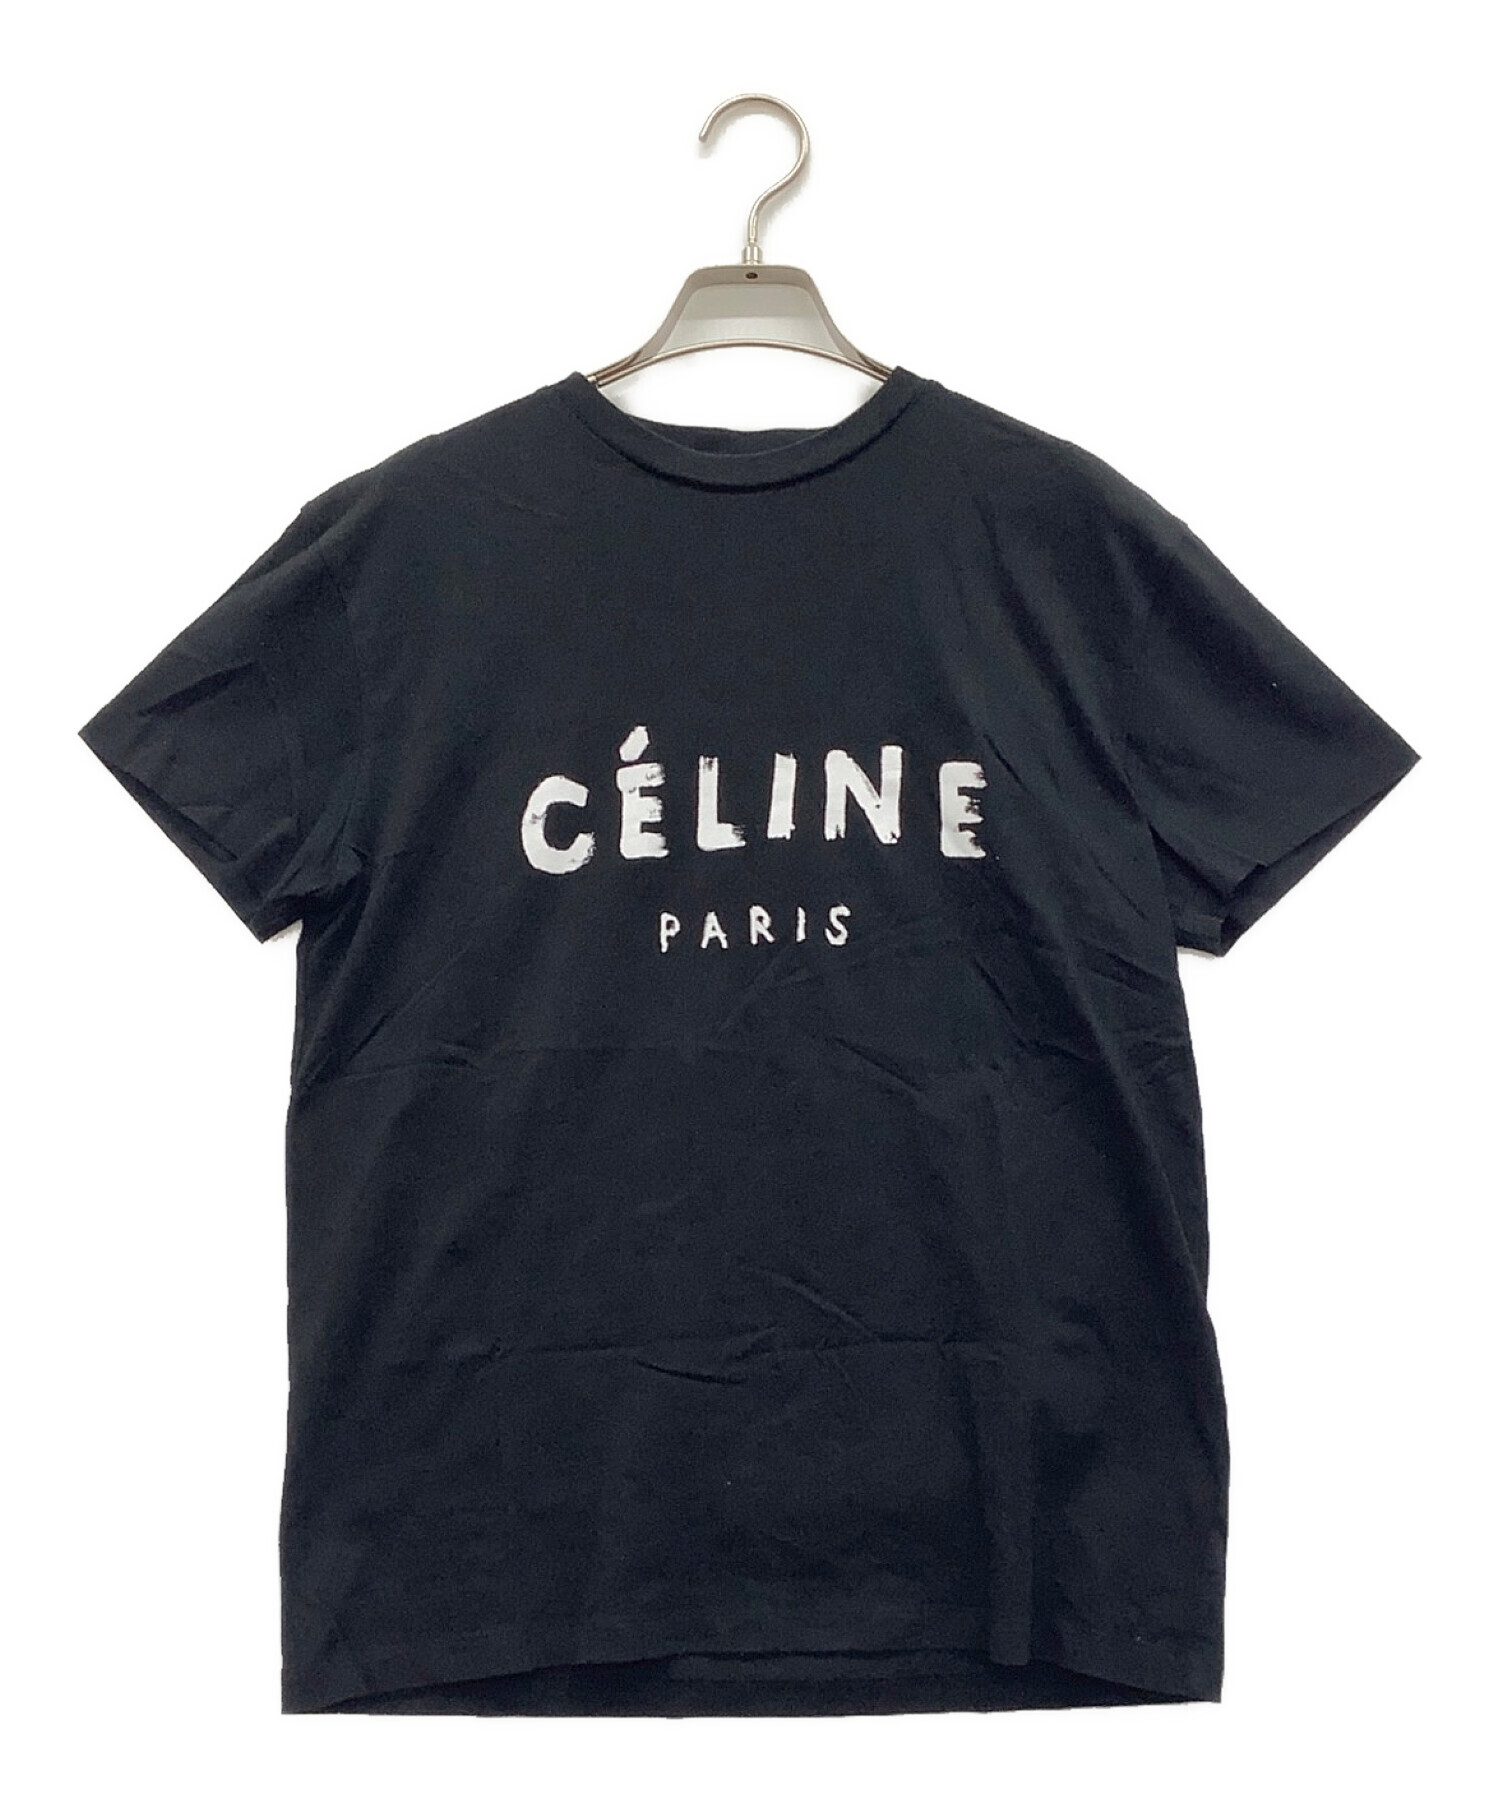 CELINEセリーヌ Tシャツ ブラック - トップス